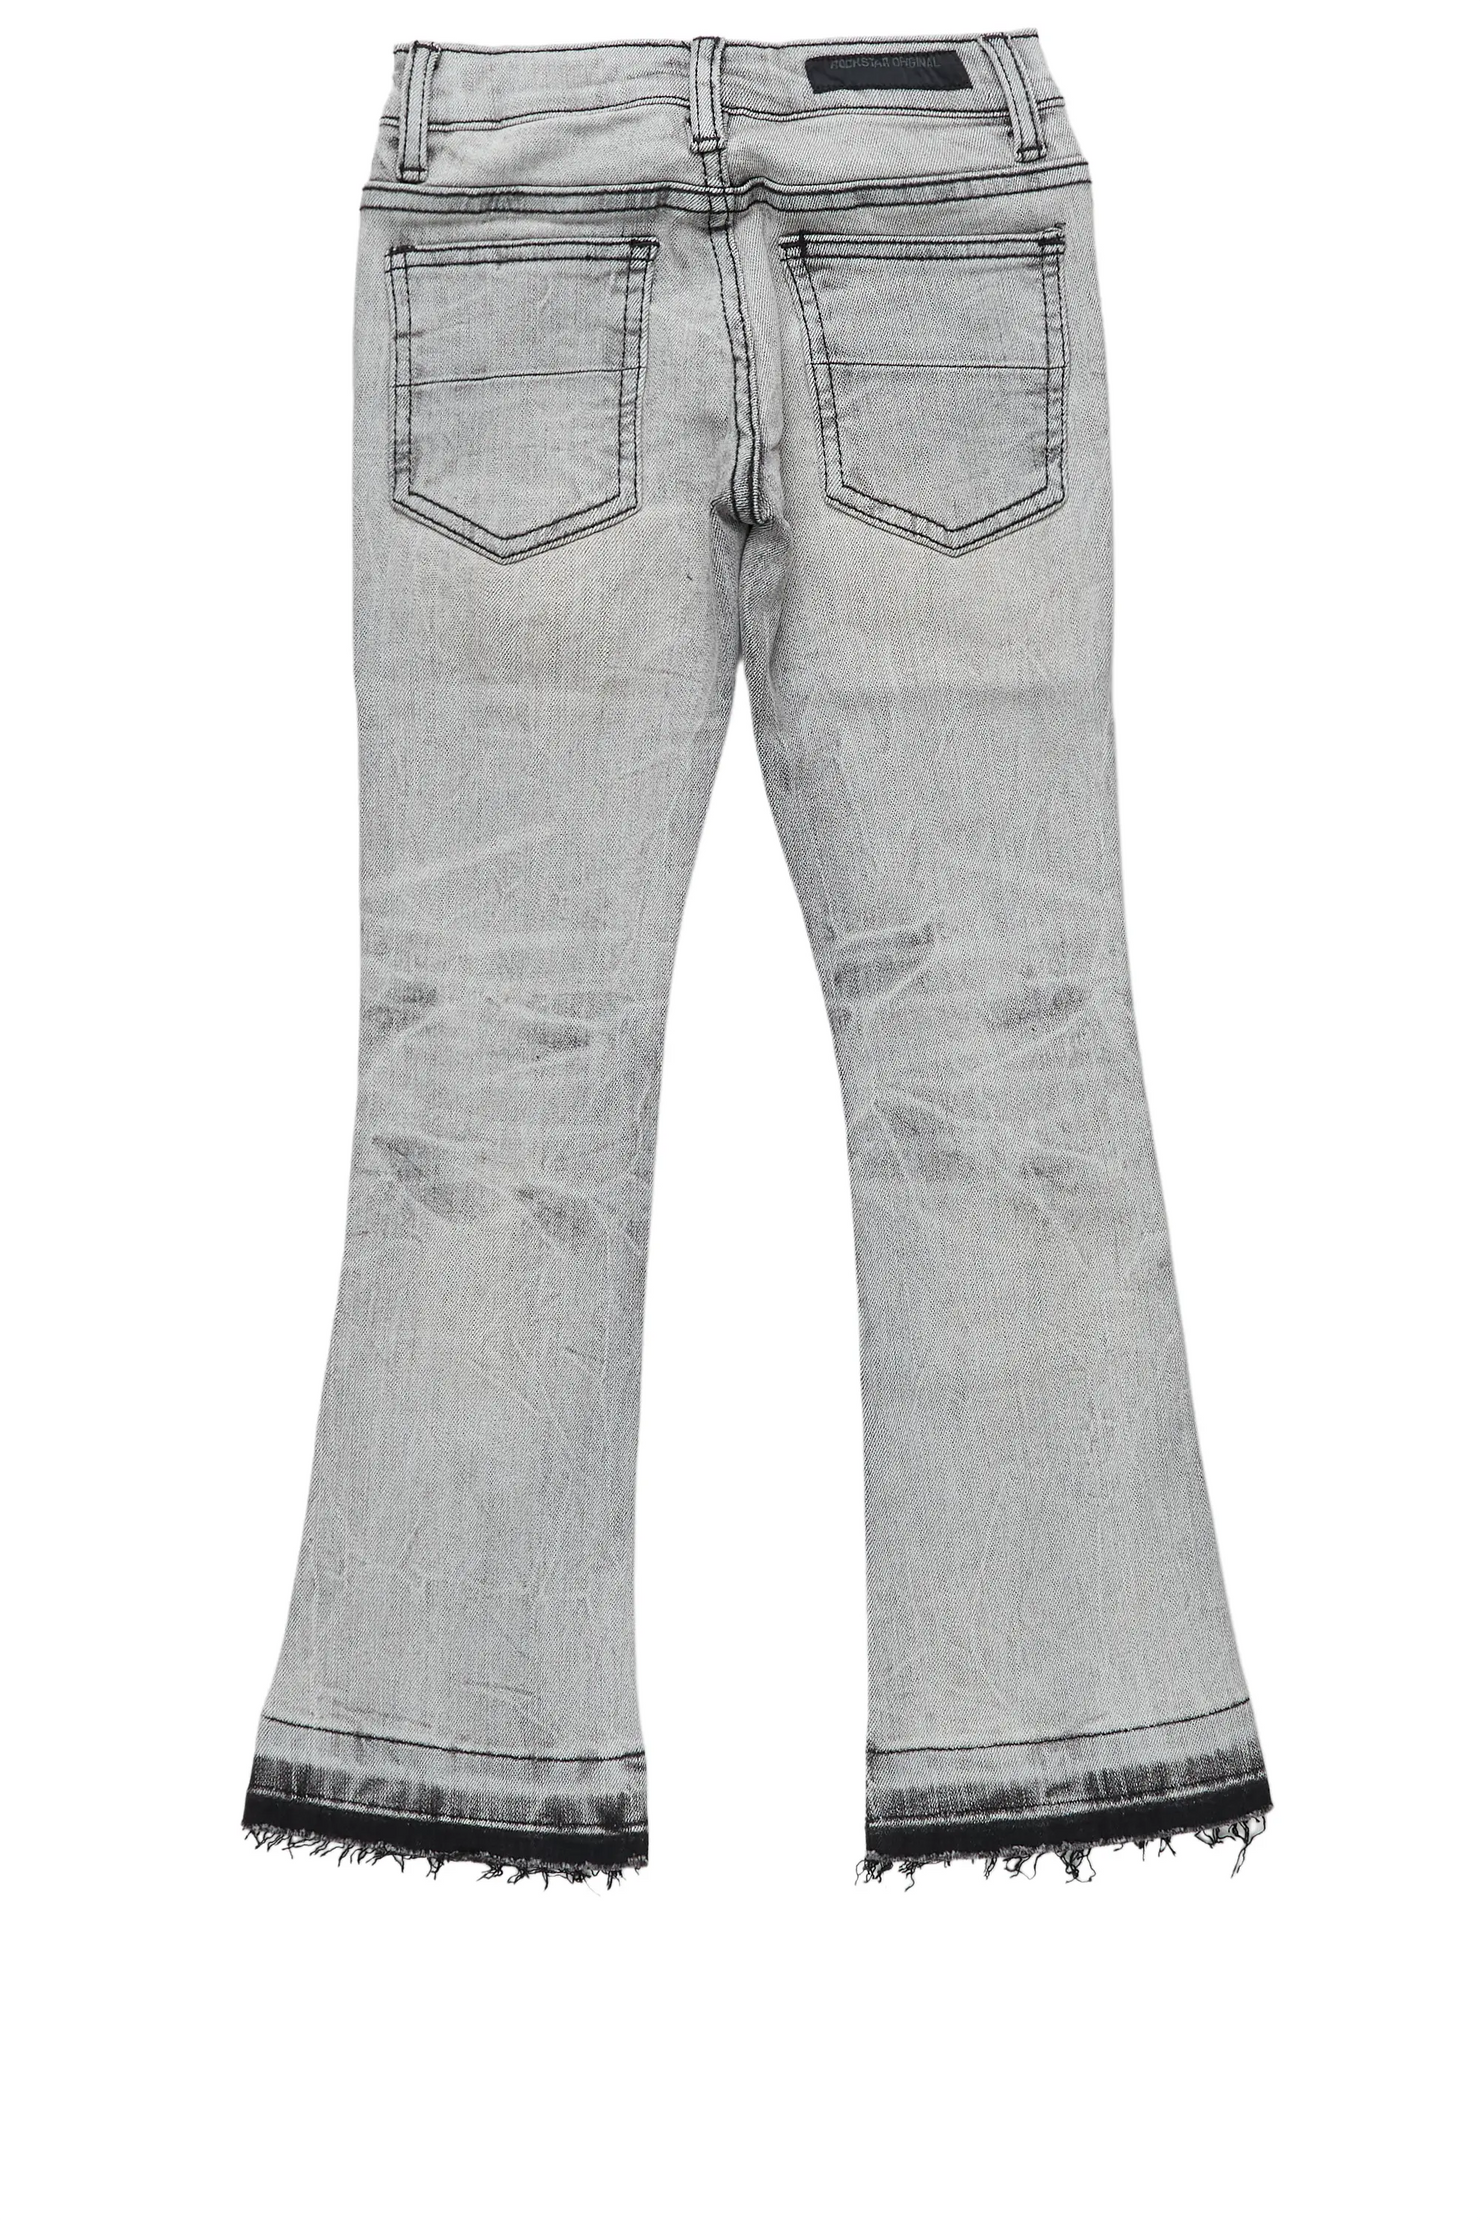 Boys Huxley Light Grey Super Stacked Flare Jean– Rockstar Original